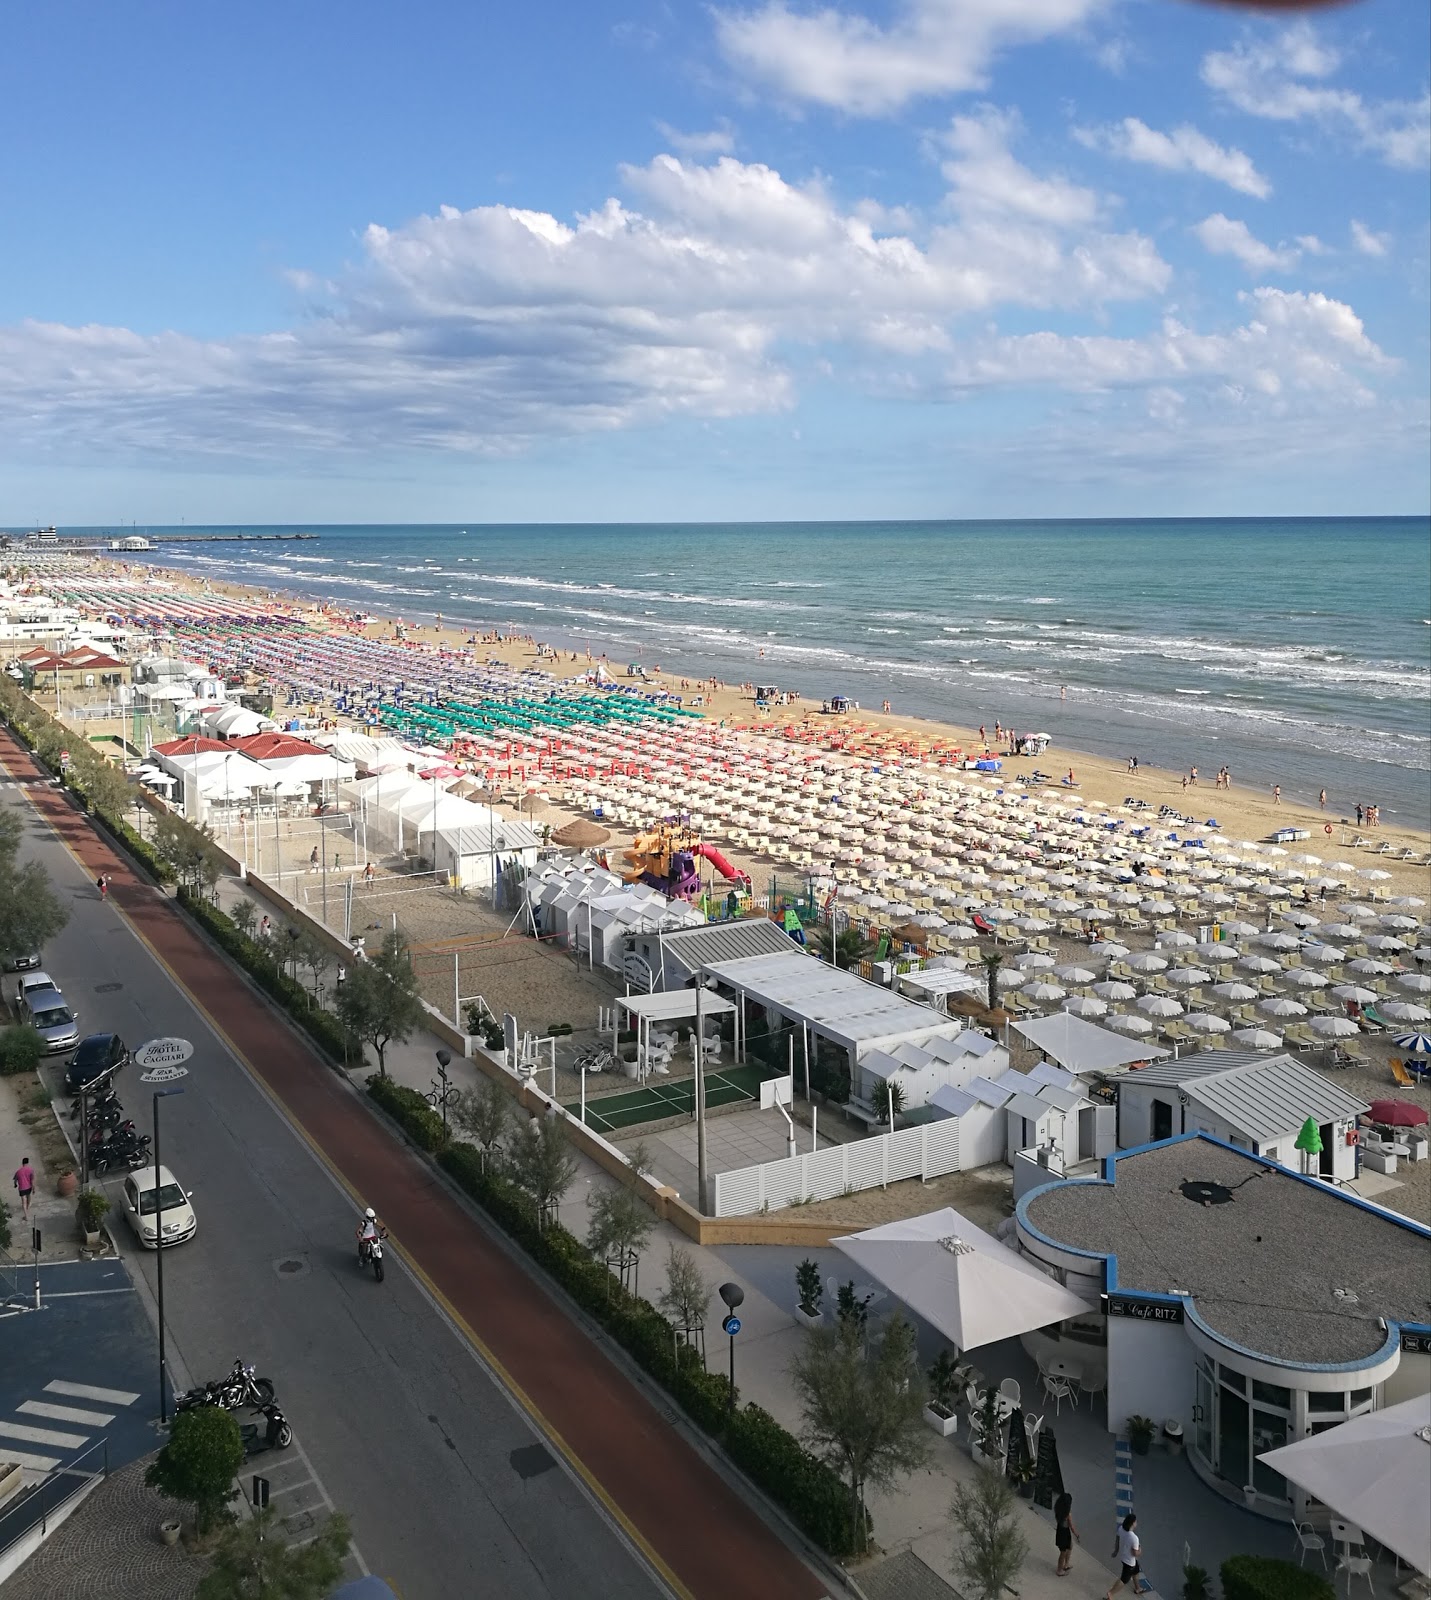 Photo of Spiaggia Senigallia amenities area